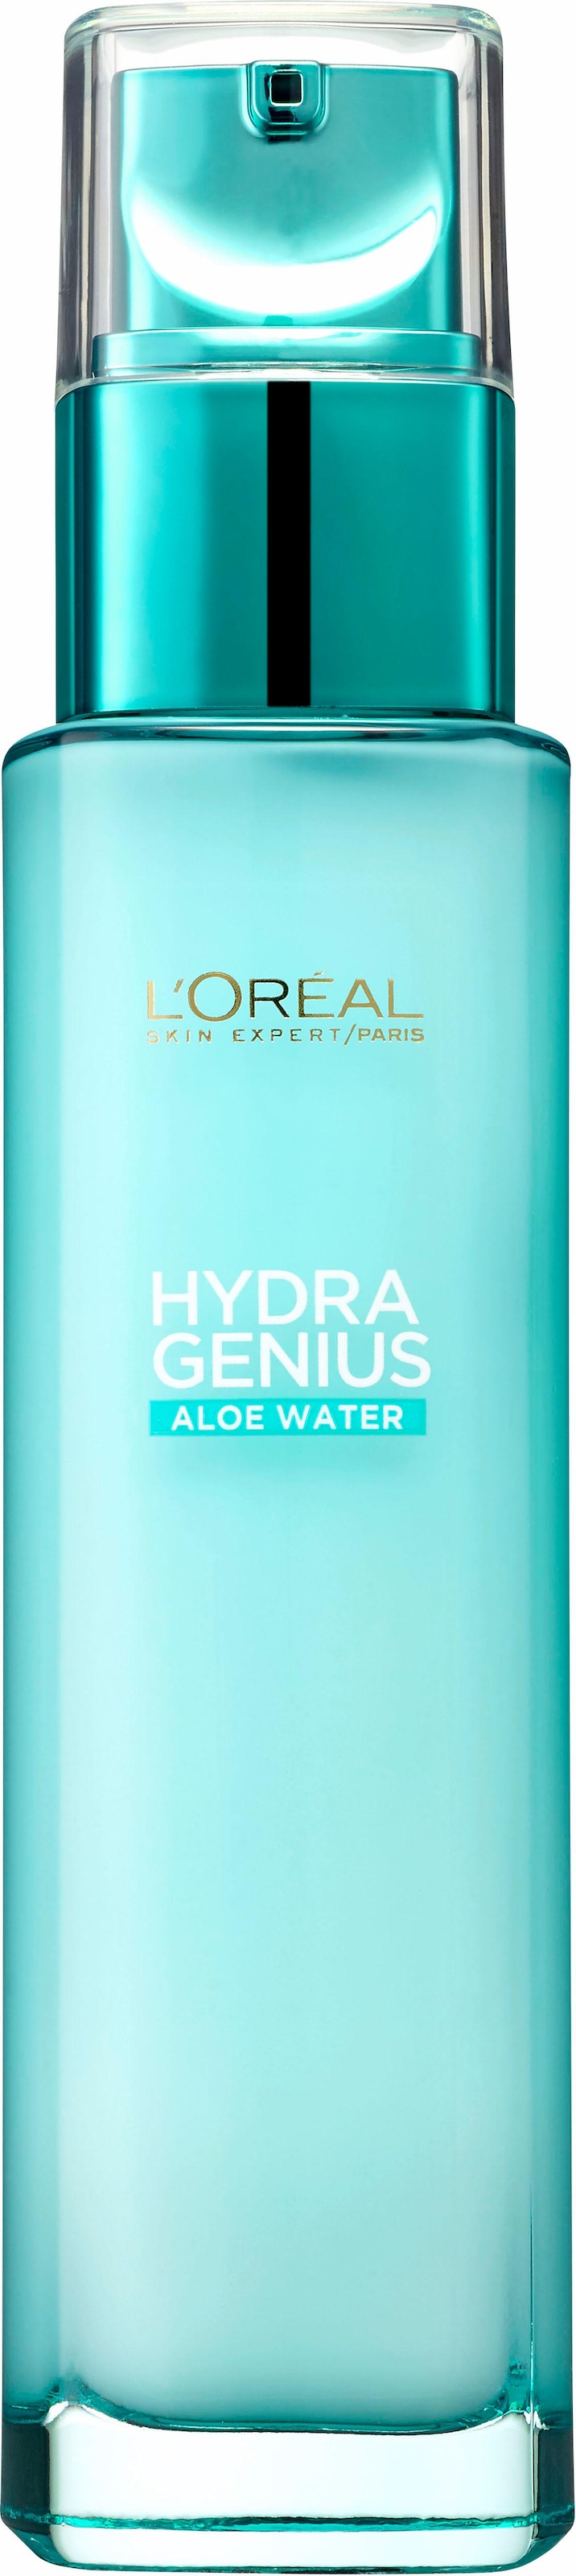 L'ORÉAL PARIS Gesichtsfluid »Hydra Genius Aloe Aqua«, für normale bis trockene Haut